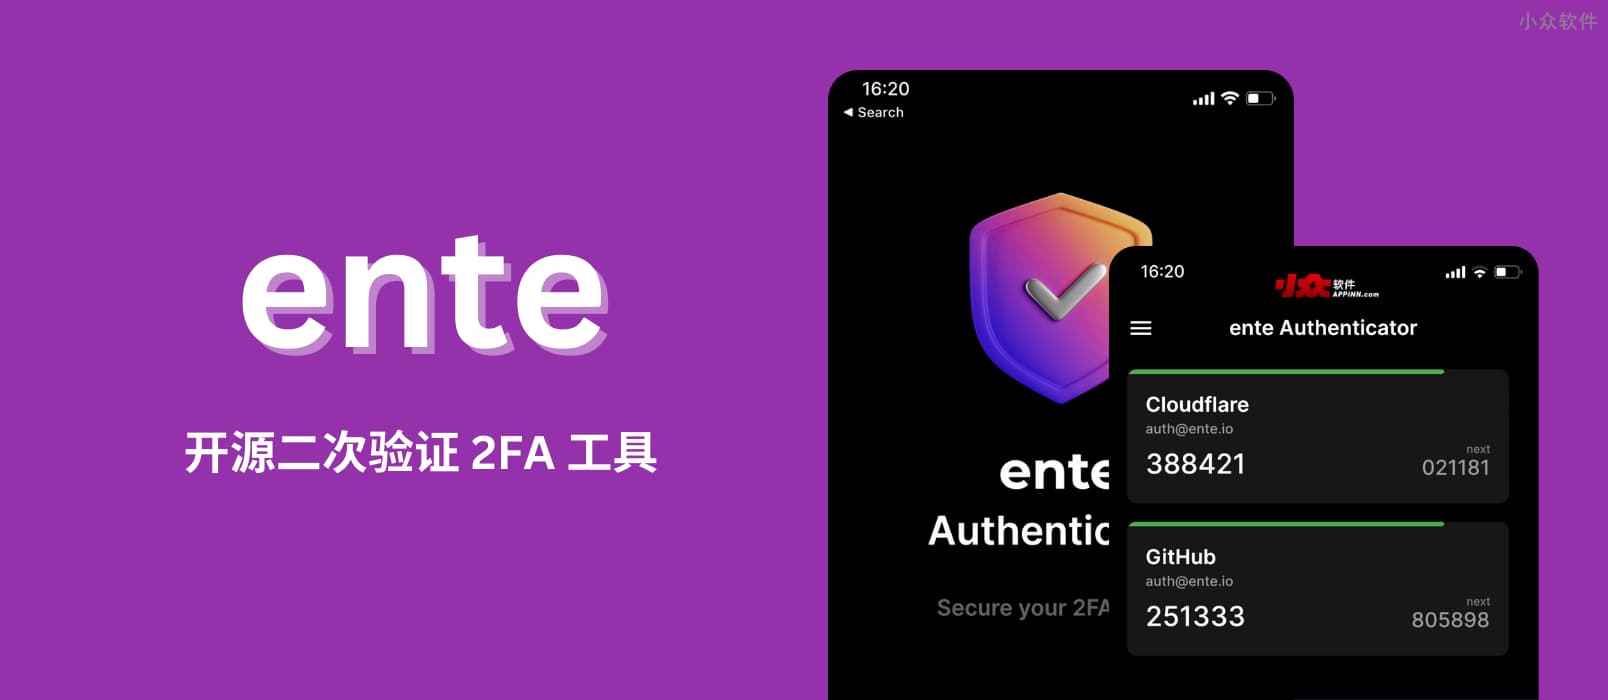 ente Authenticator - 开源二次验证 2FA 工具：云存储、同步、导入导出[Android/iOS]